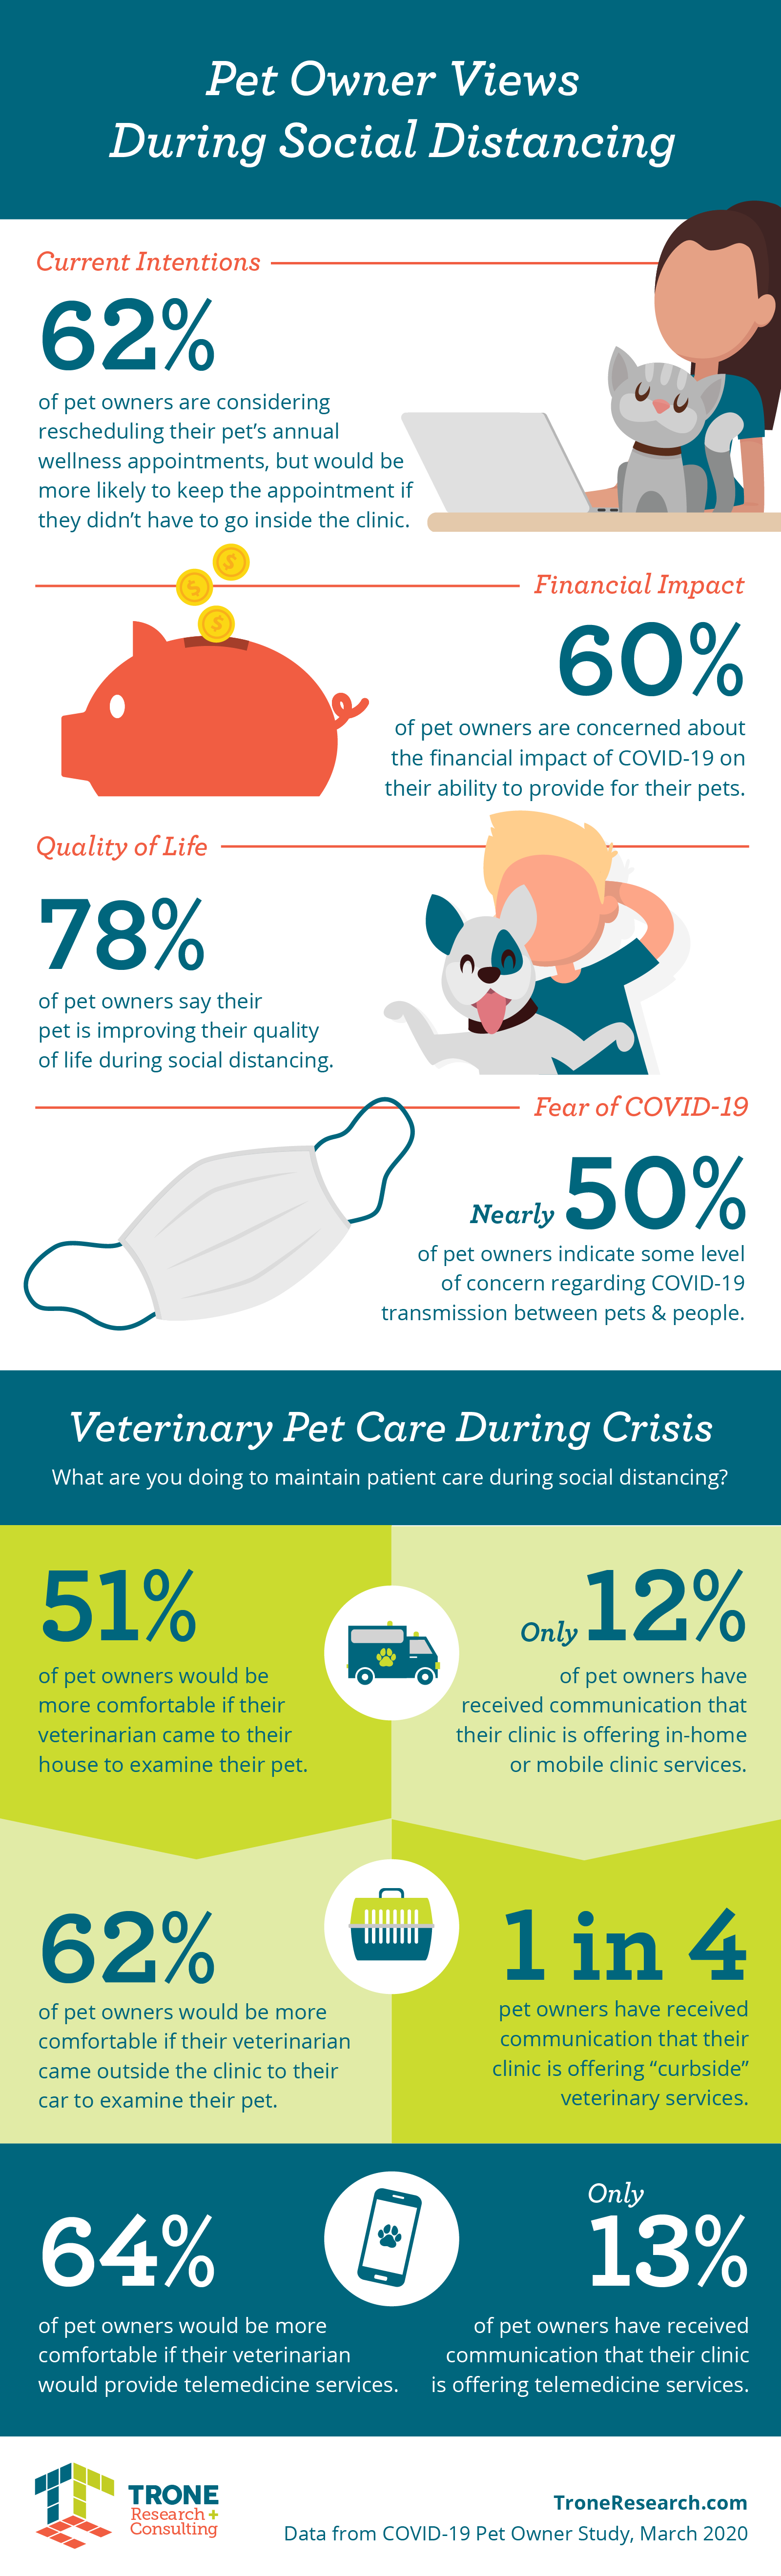 Pet Owner Views During Social Distancing